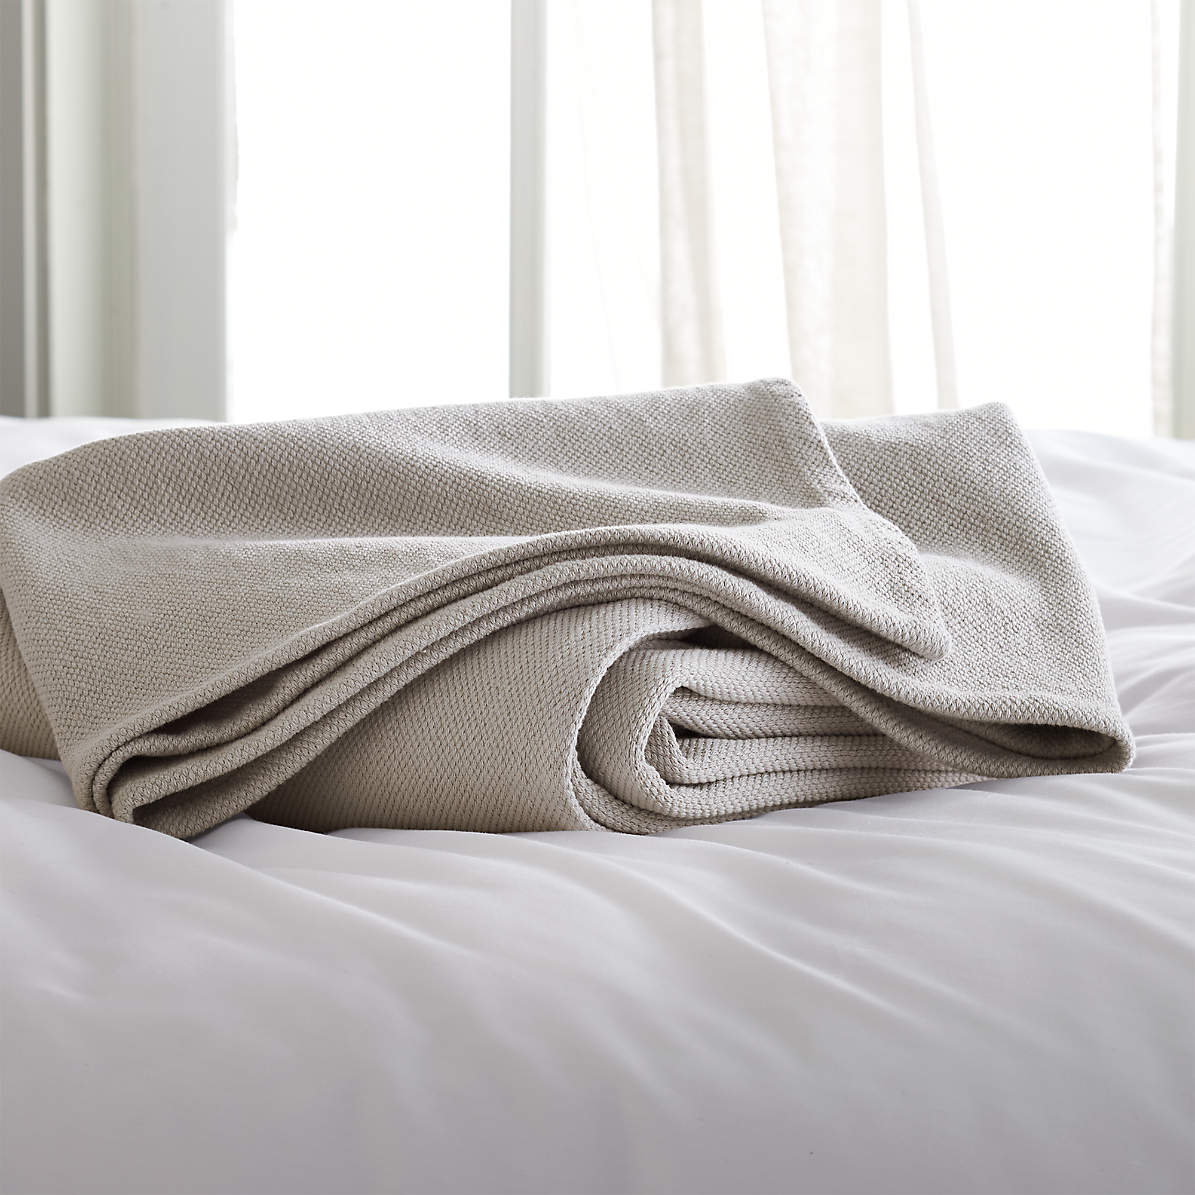 Siesta Grey King Blanket Reviews, Cotton Blanket King Size Bed